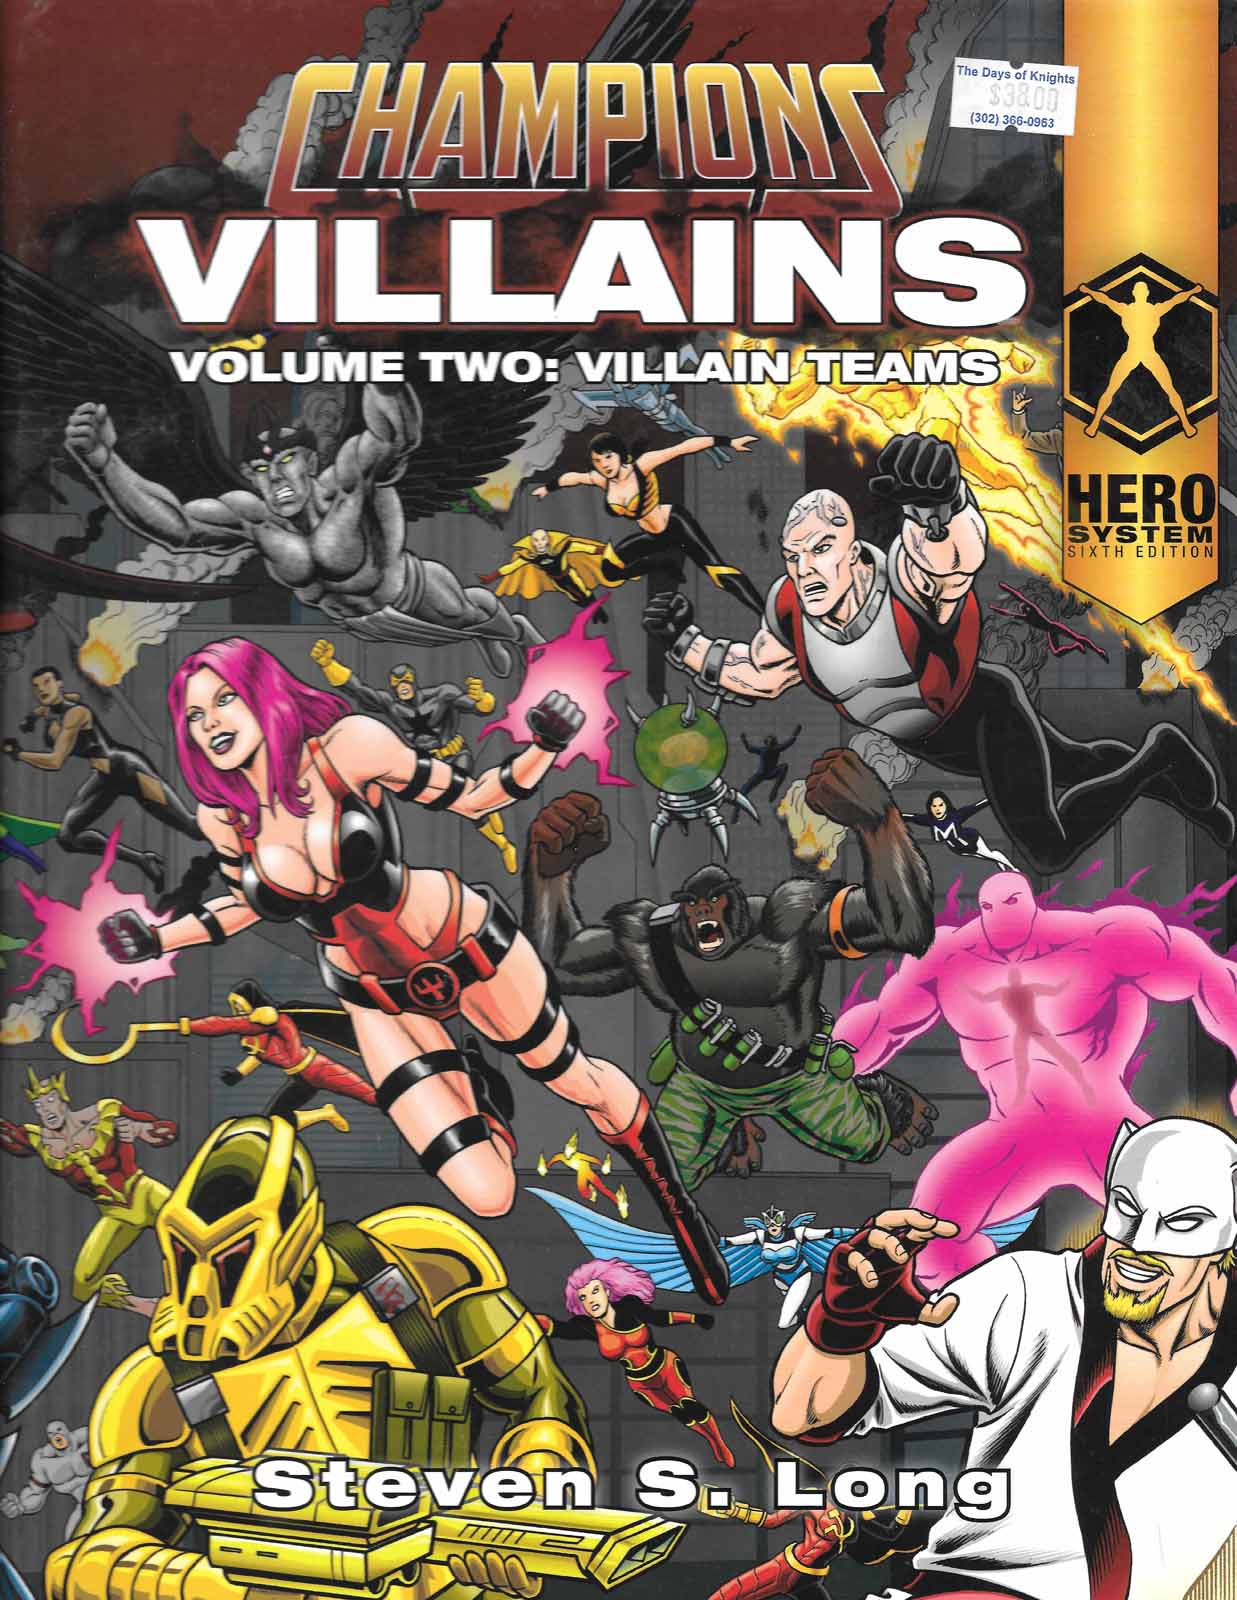 Champions Villains Volume Two: Villain Teams